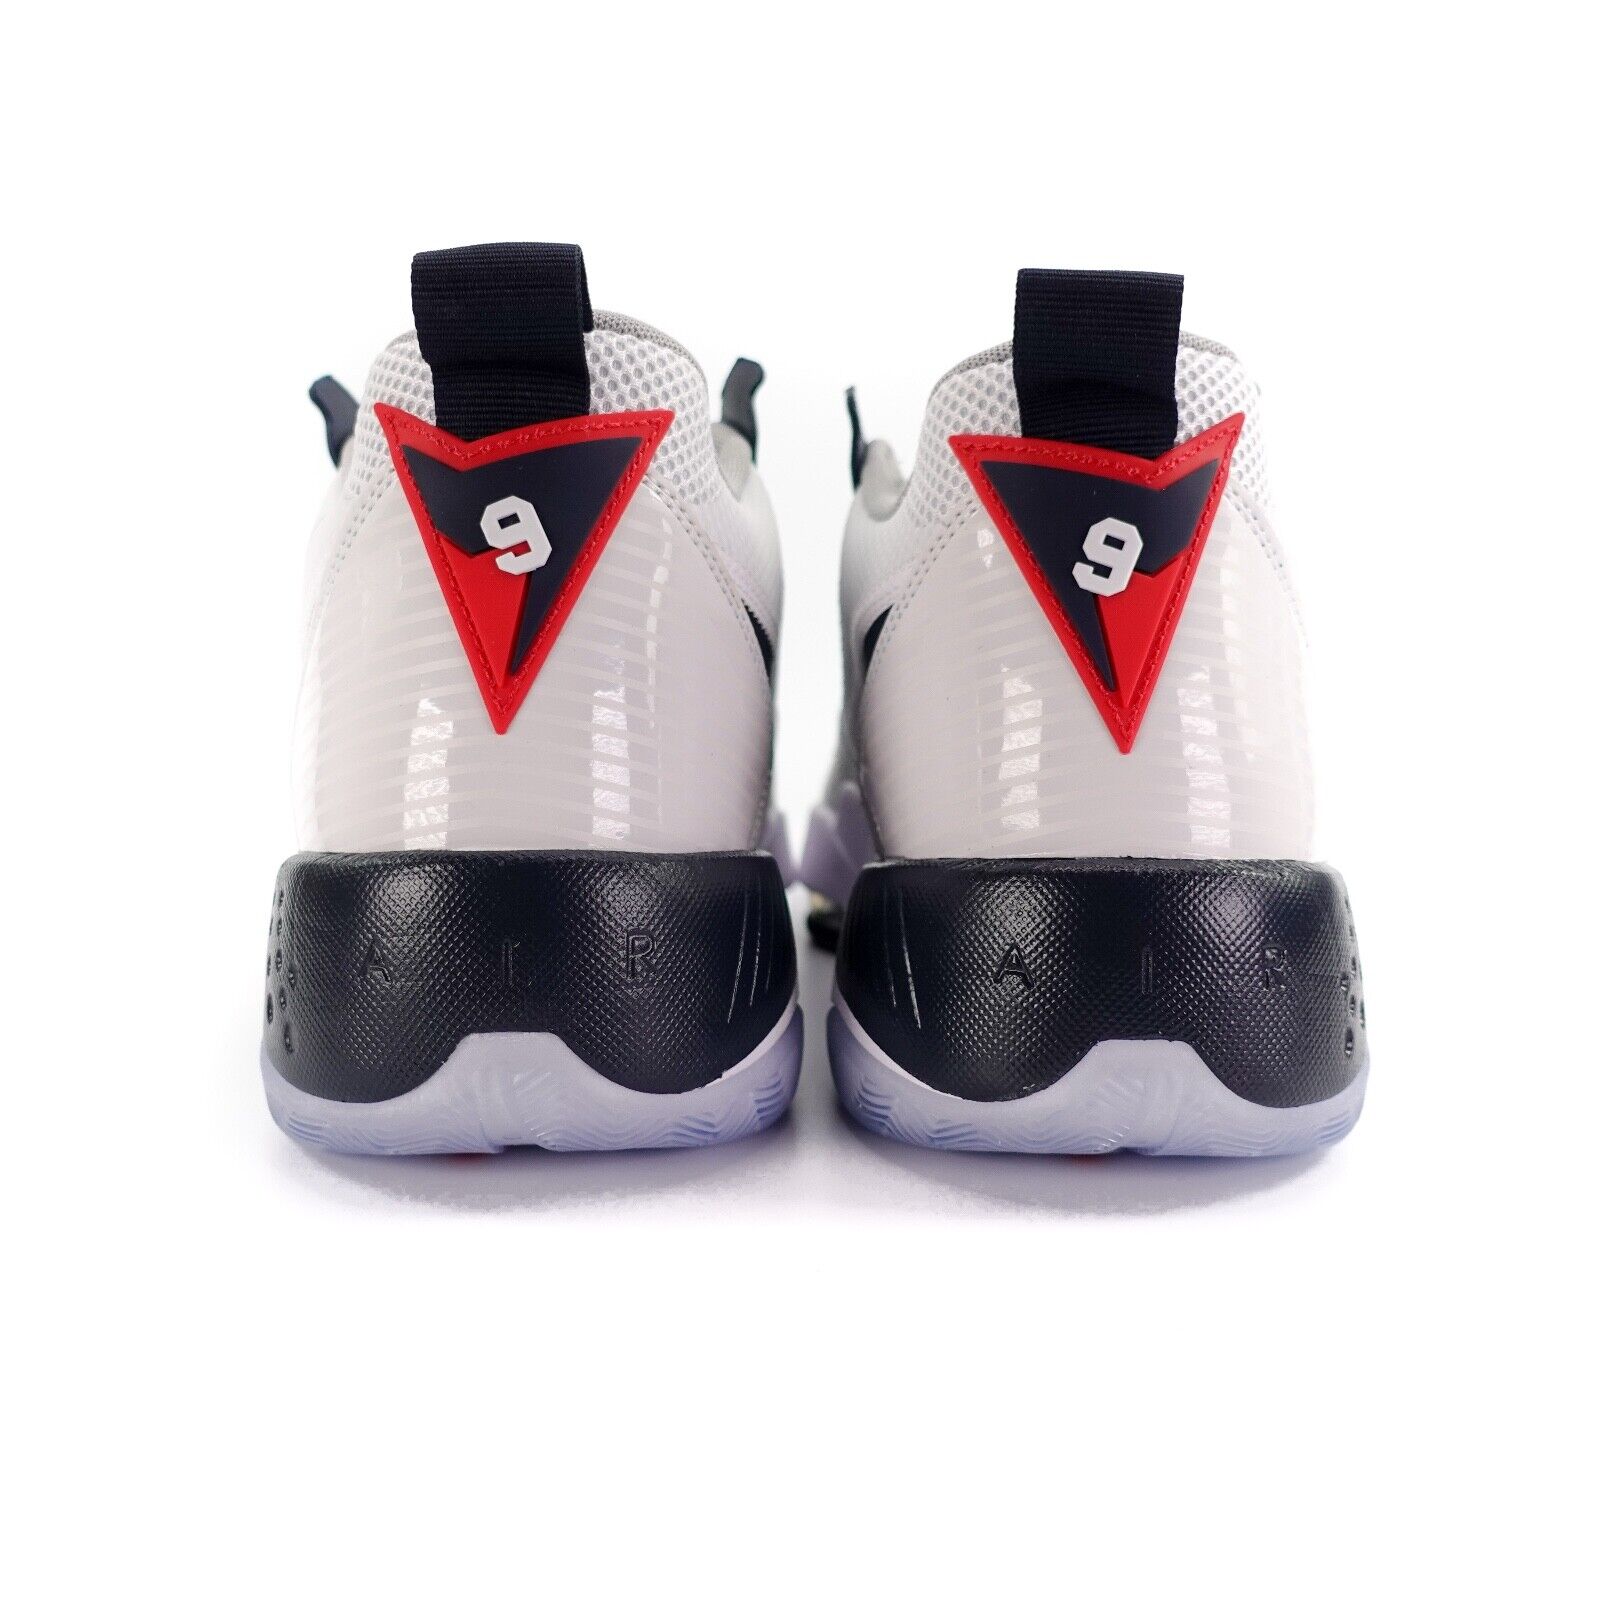 Nike Air Jordan Zoom 92 USA Olympic Basketball Shoes CK9183 101